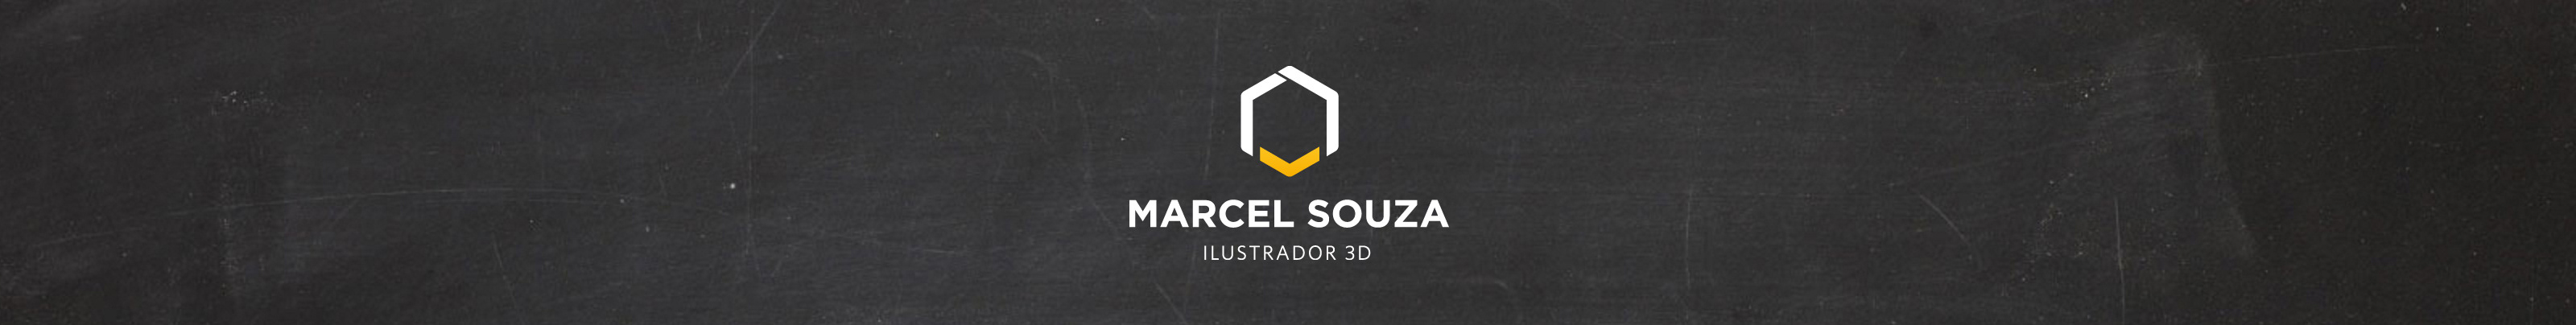 Marcel Souza profil başlığı